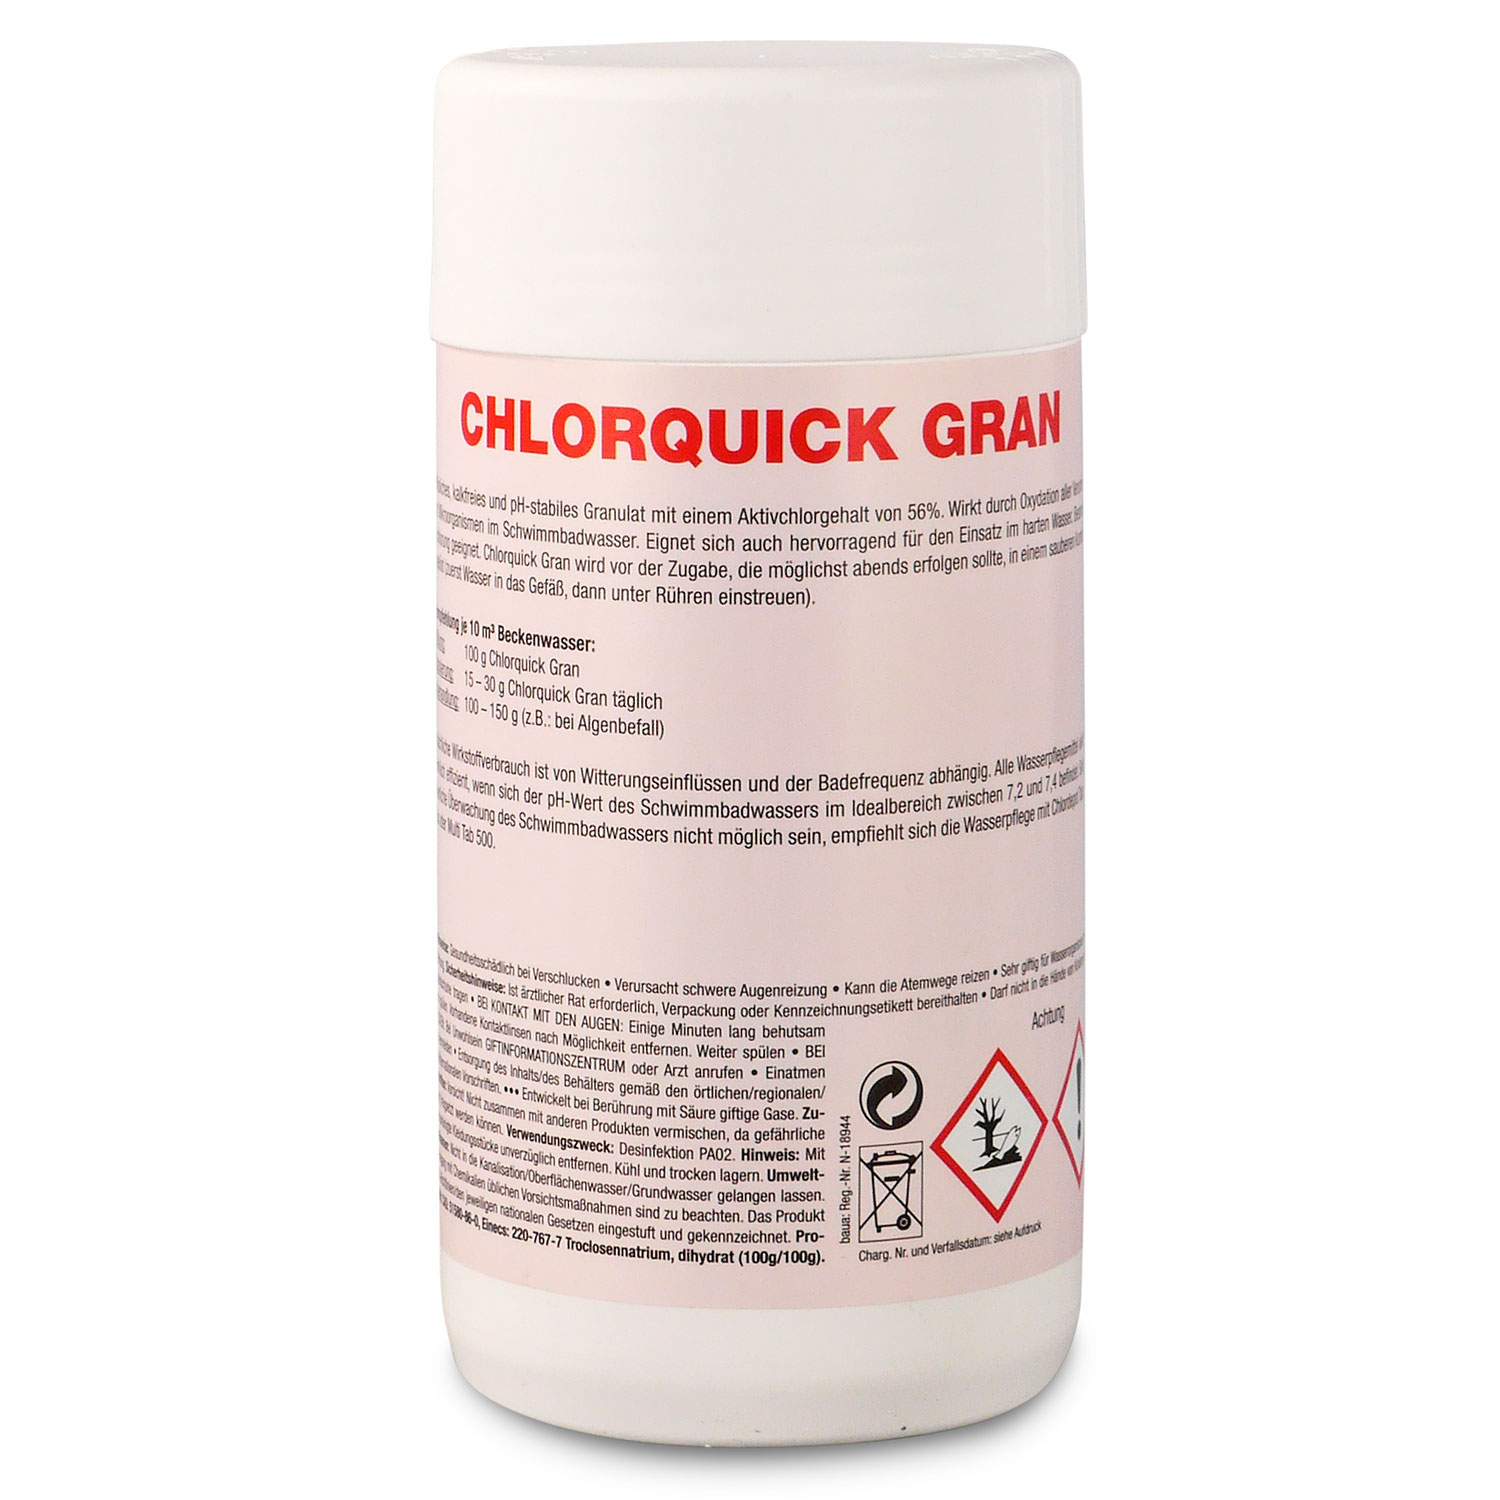 myPOOL Chlorquick Gran Schnellgranulat 1,0 kg